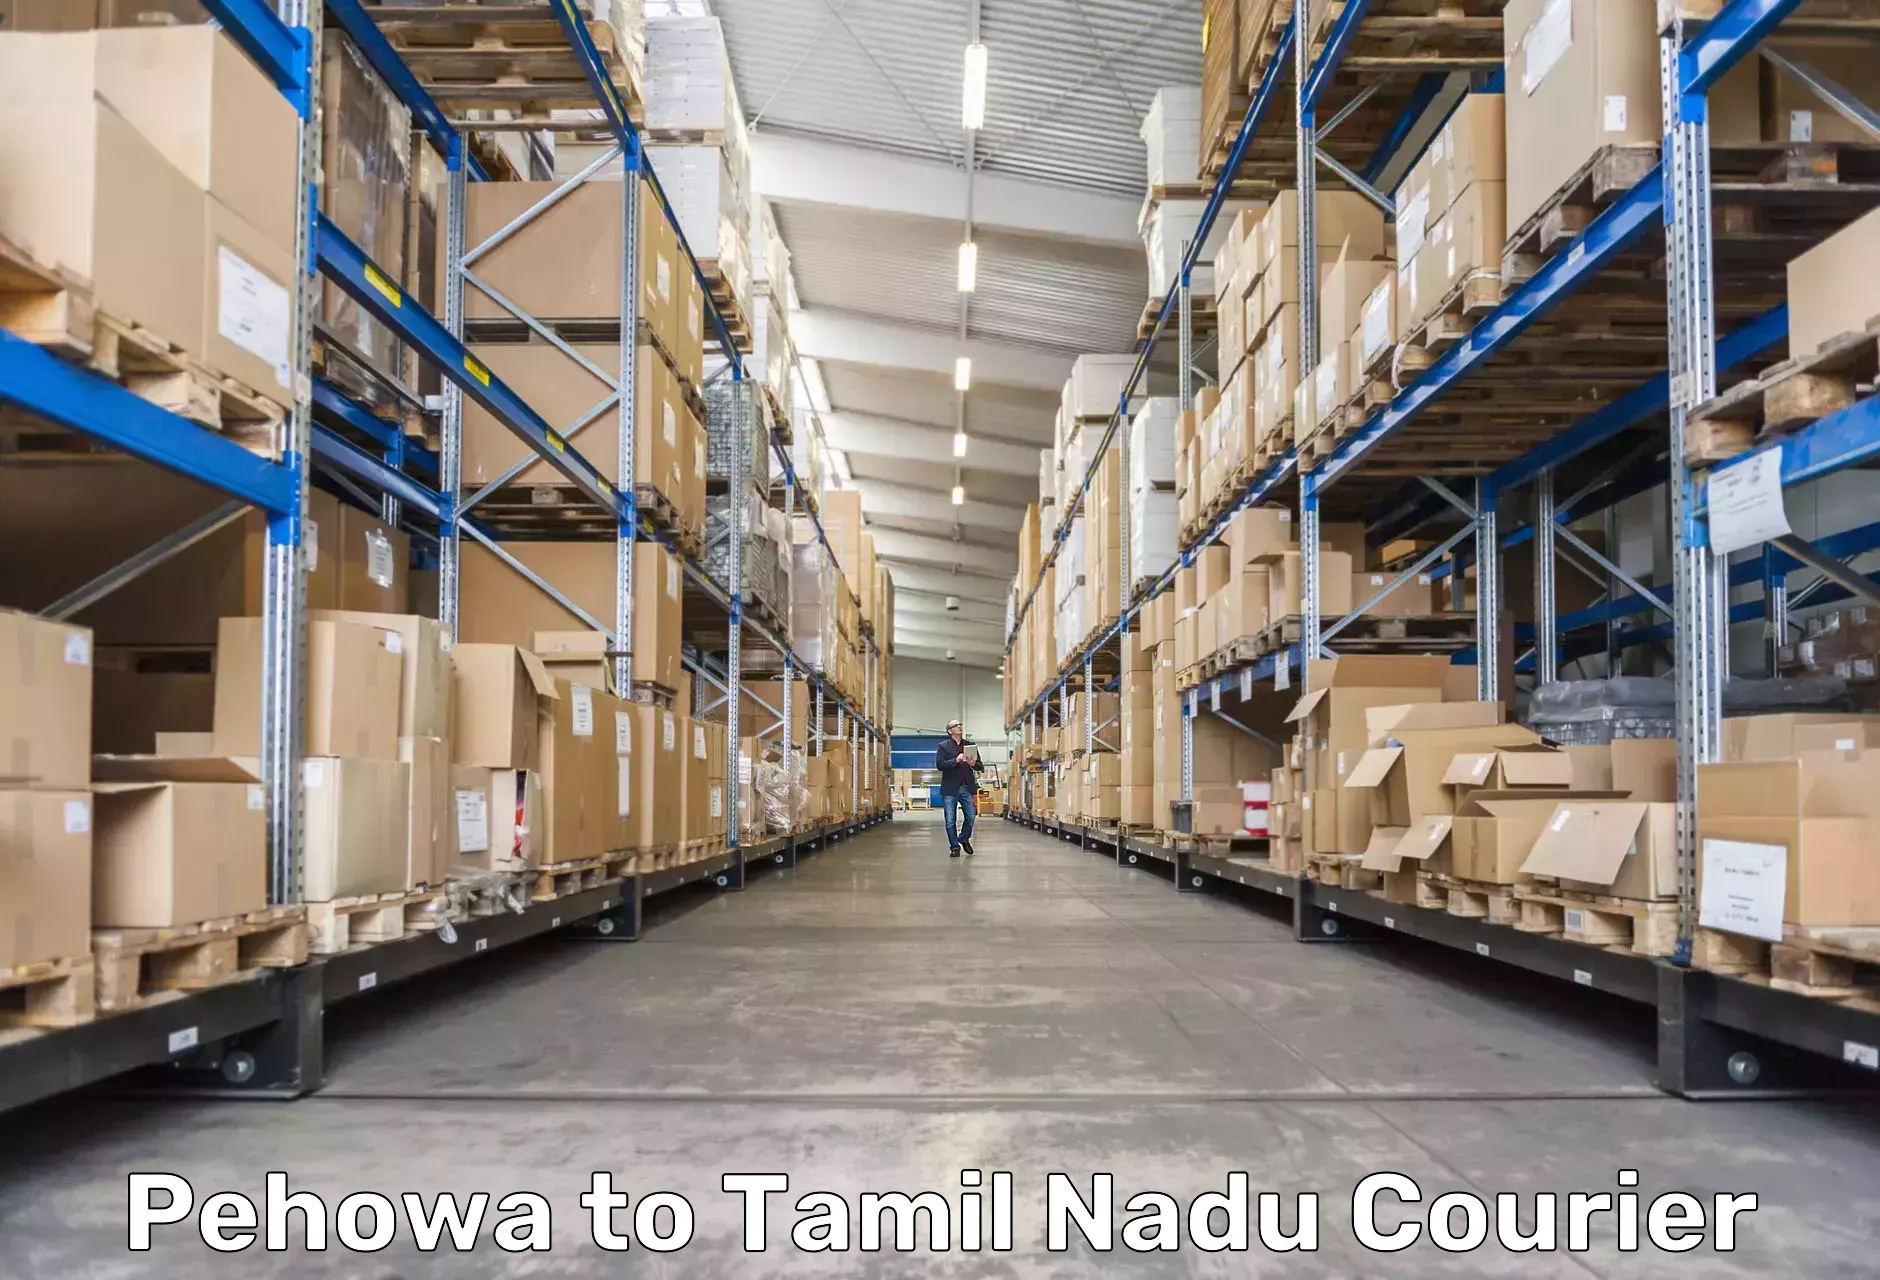 Courier service comparison Pehowa to Tamil Nadu